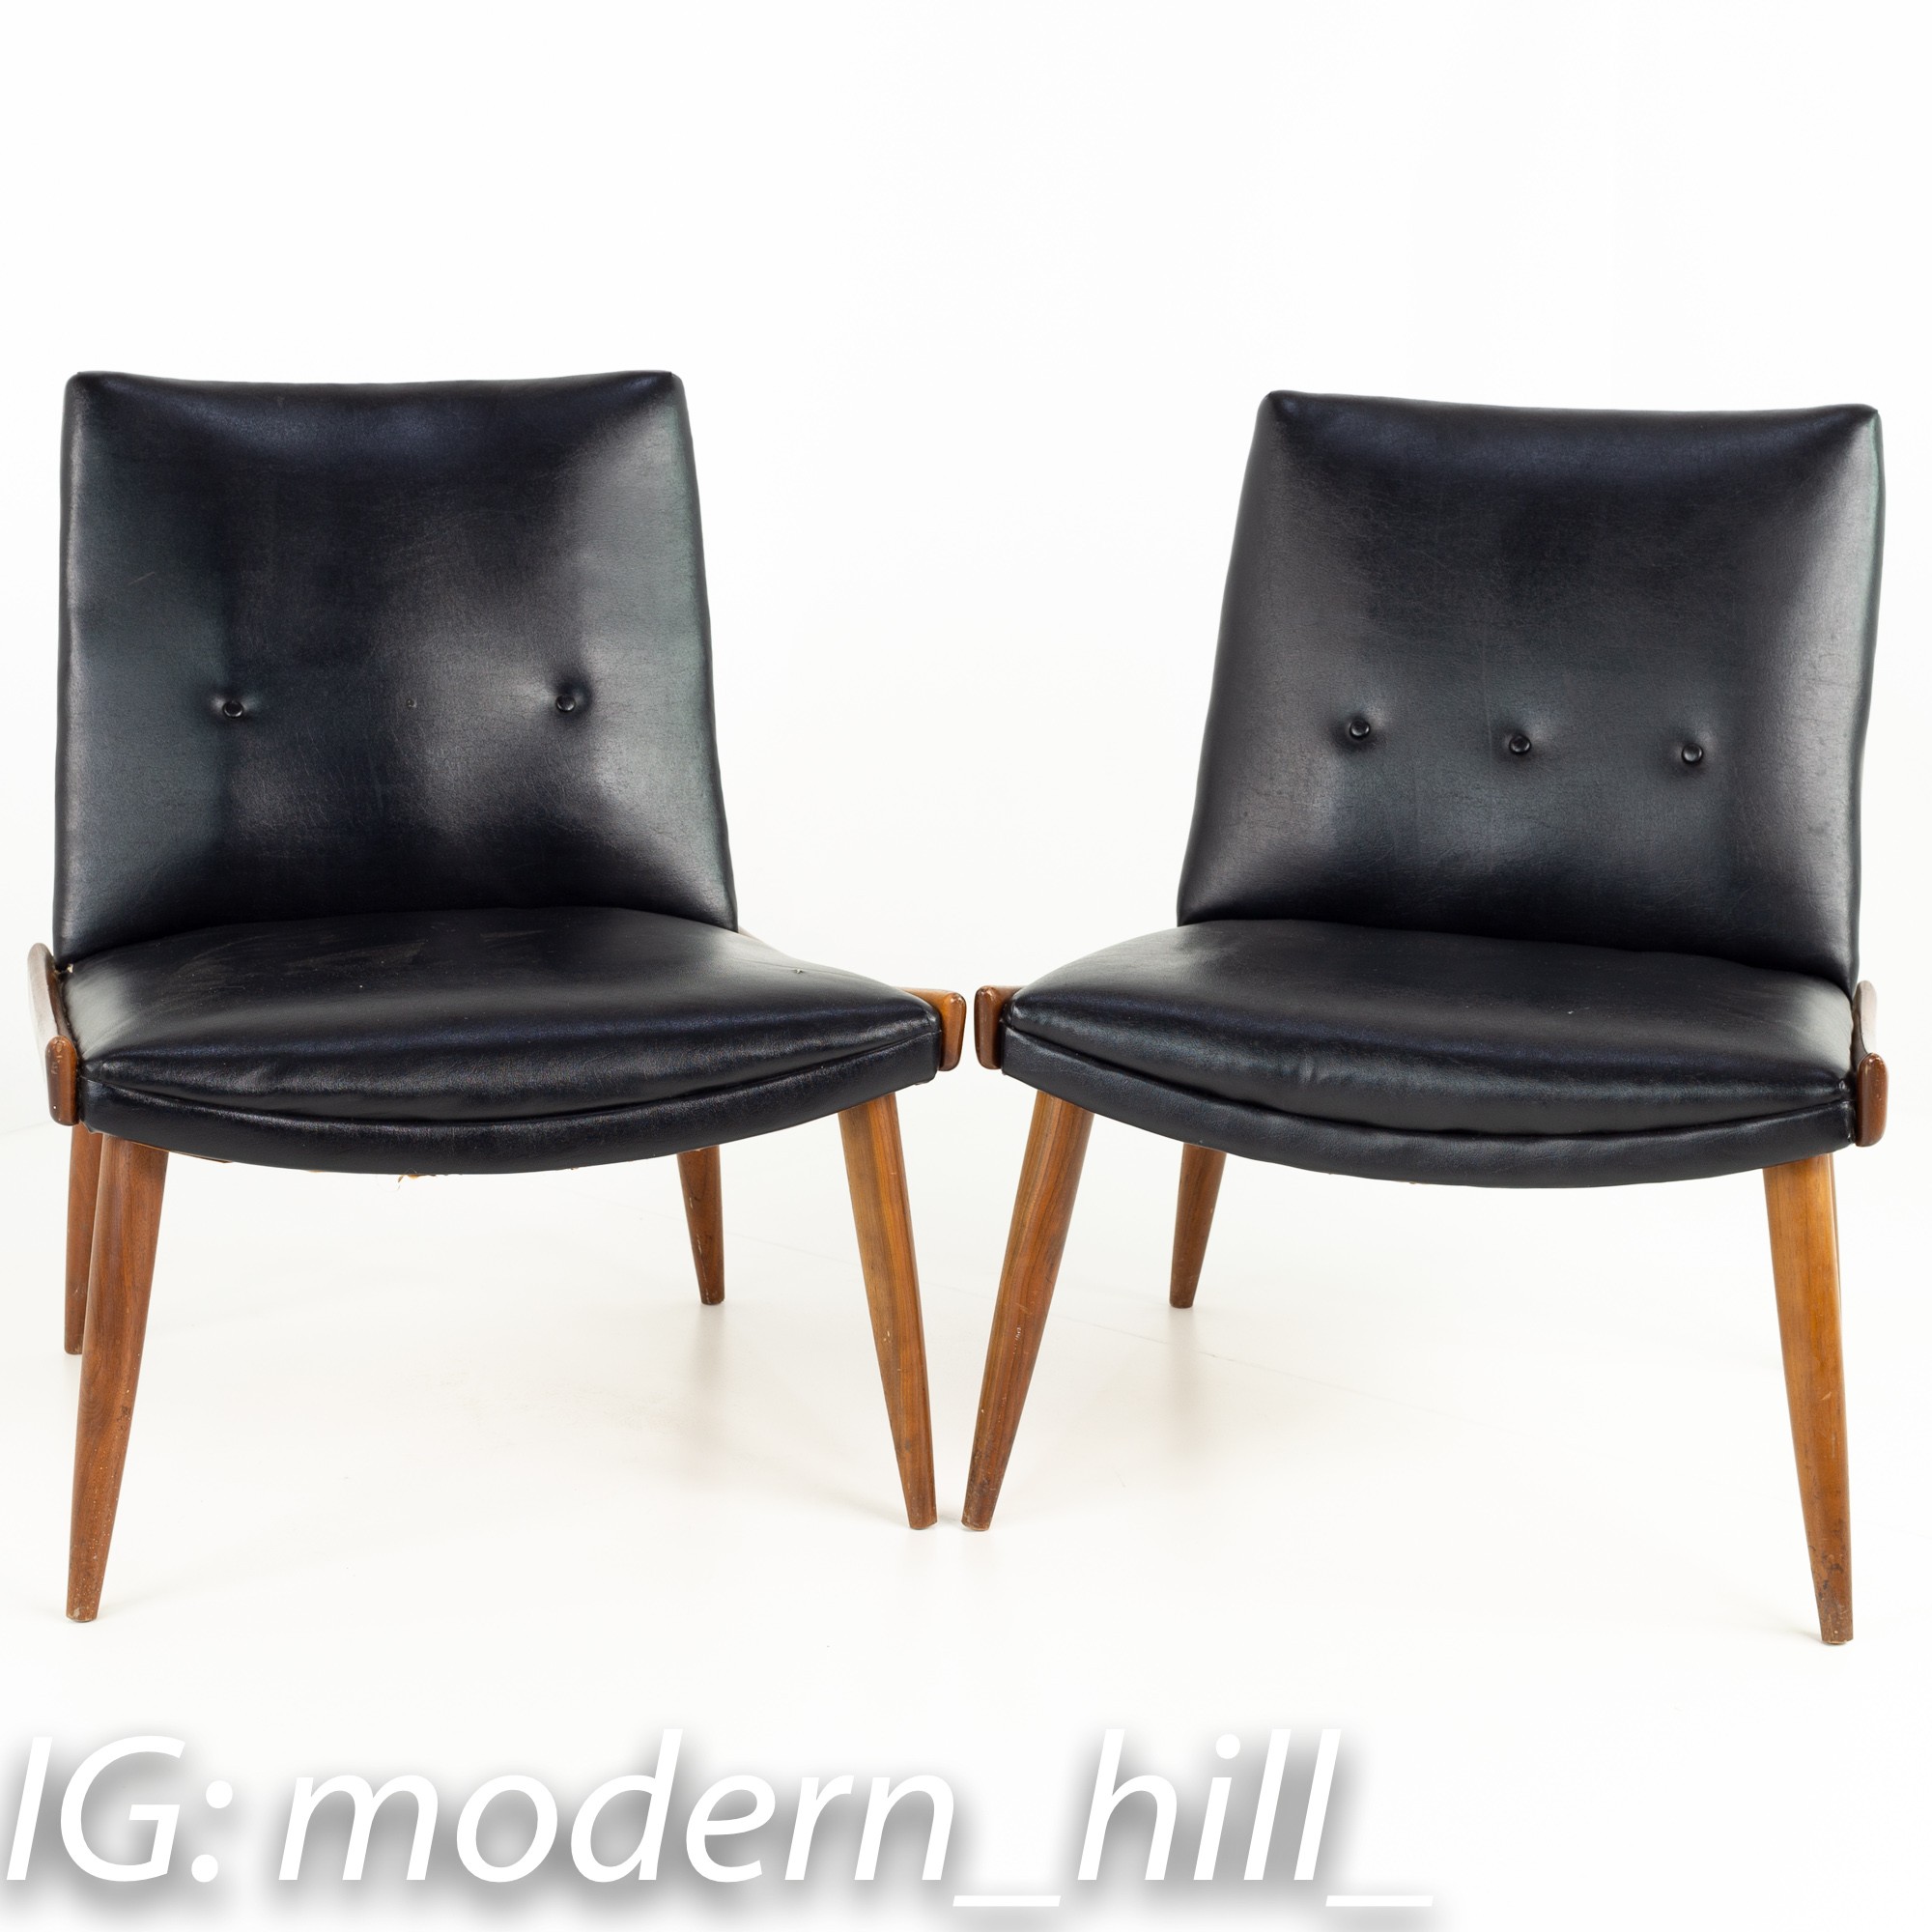 Paul Mccobb Style Kroehler Mid Century Black Vinyl and Walnut Slipper Chairs - Pair